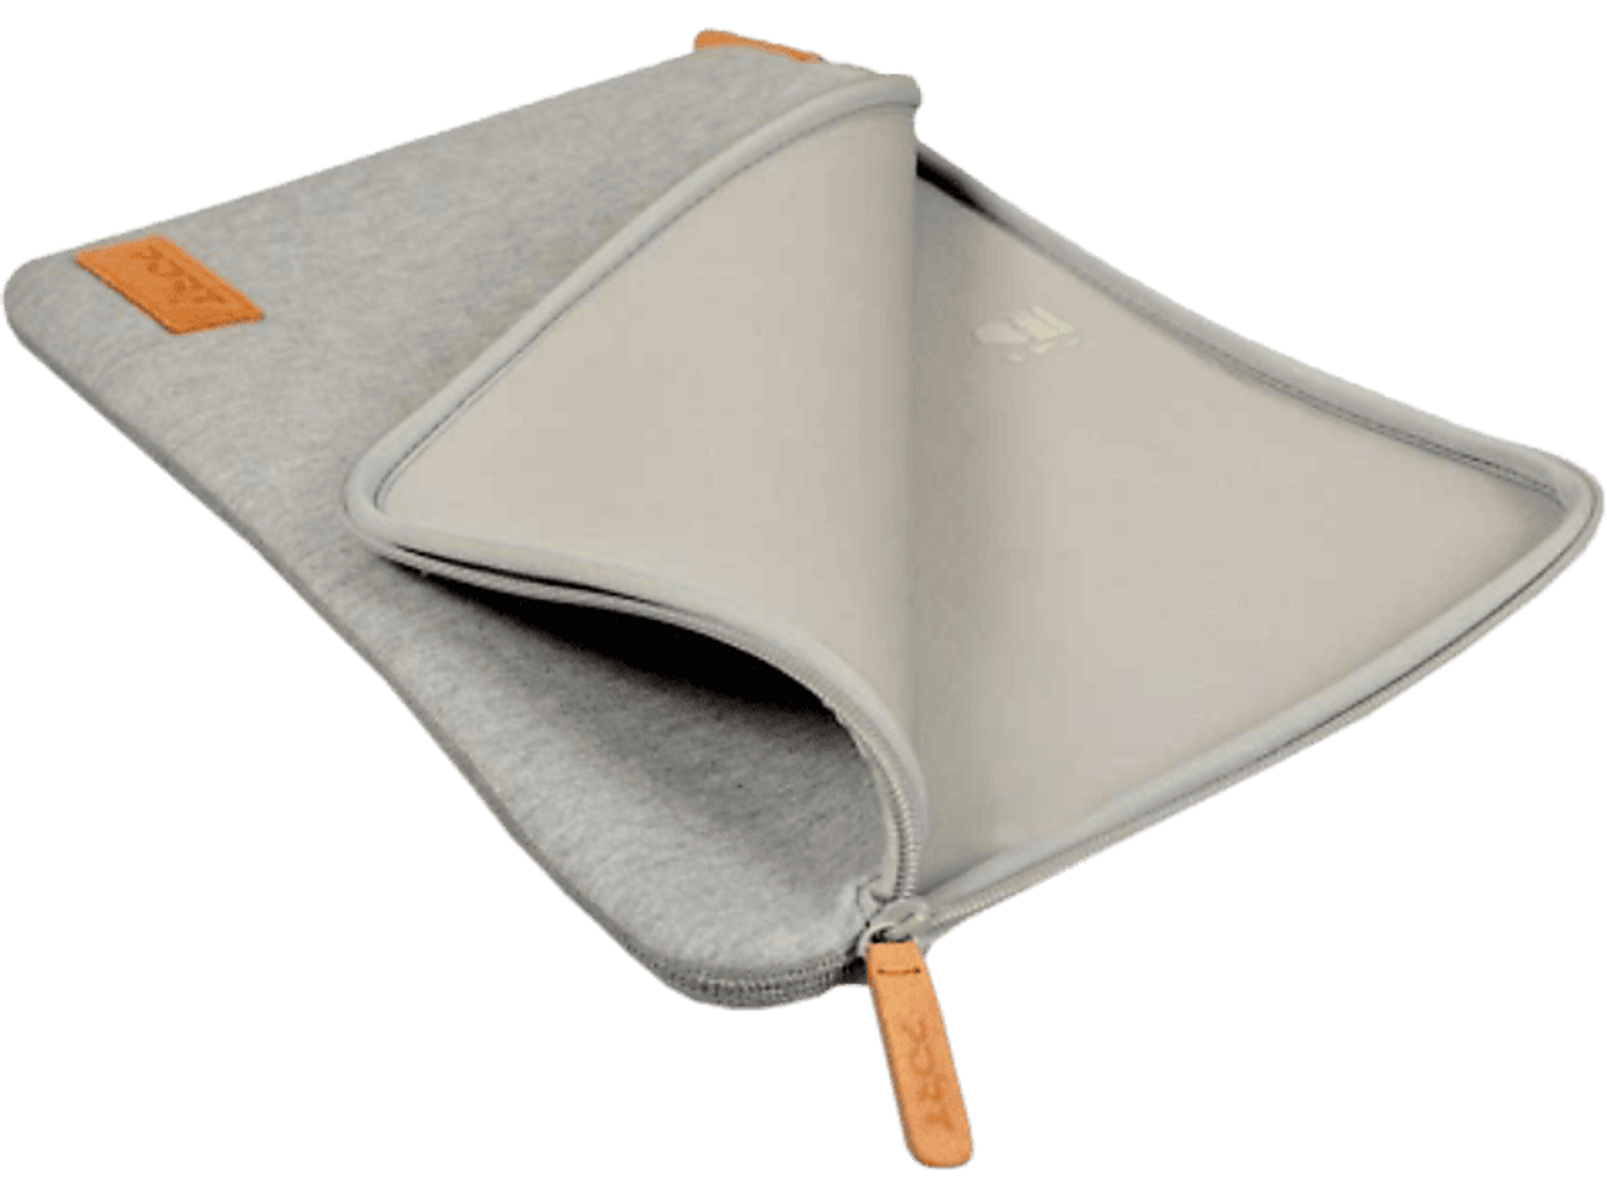 GRAU Sleeve PORT SLEEVE 12,5 Universal Grau Notebooktasche für ZOLL TORINO 140383 Neopren/Baumwolljersey,